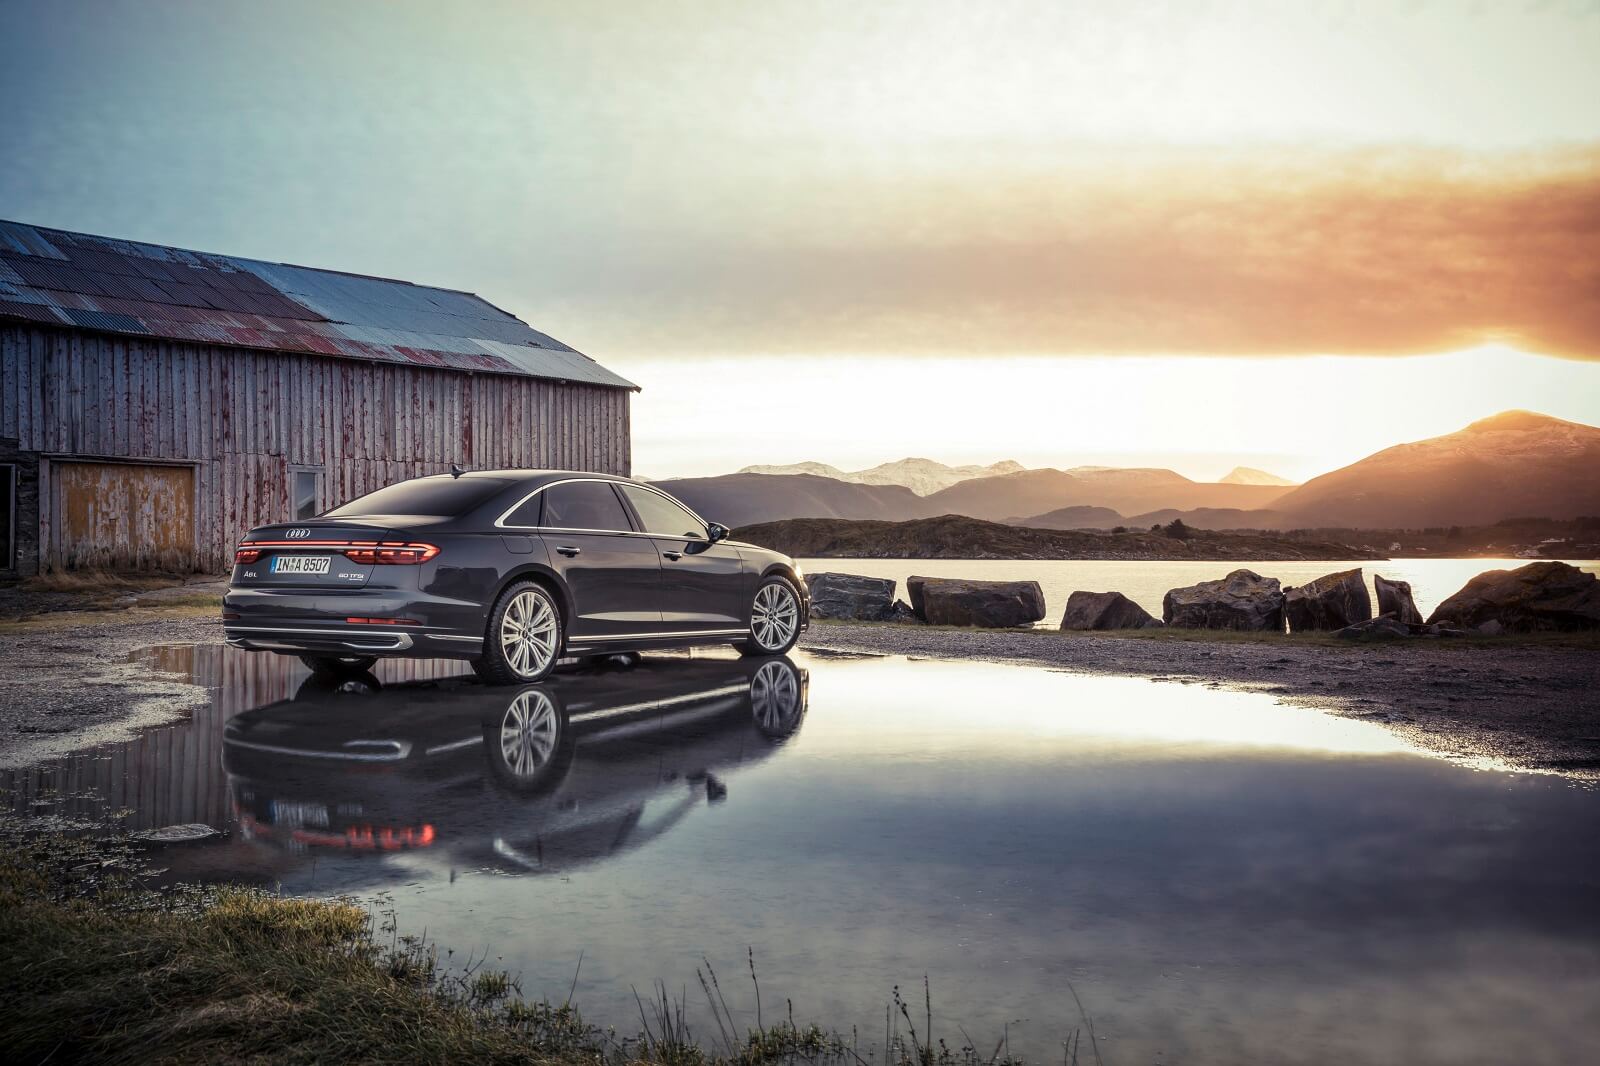 2022 Audi A8 L India Details